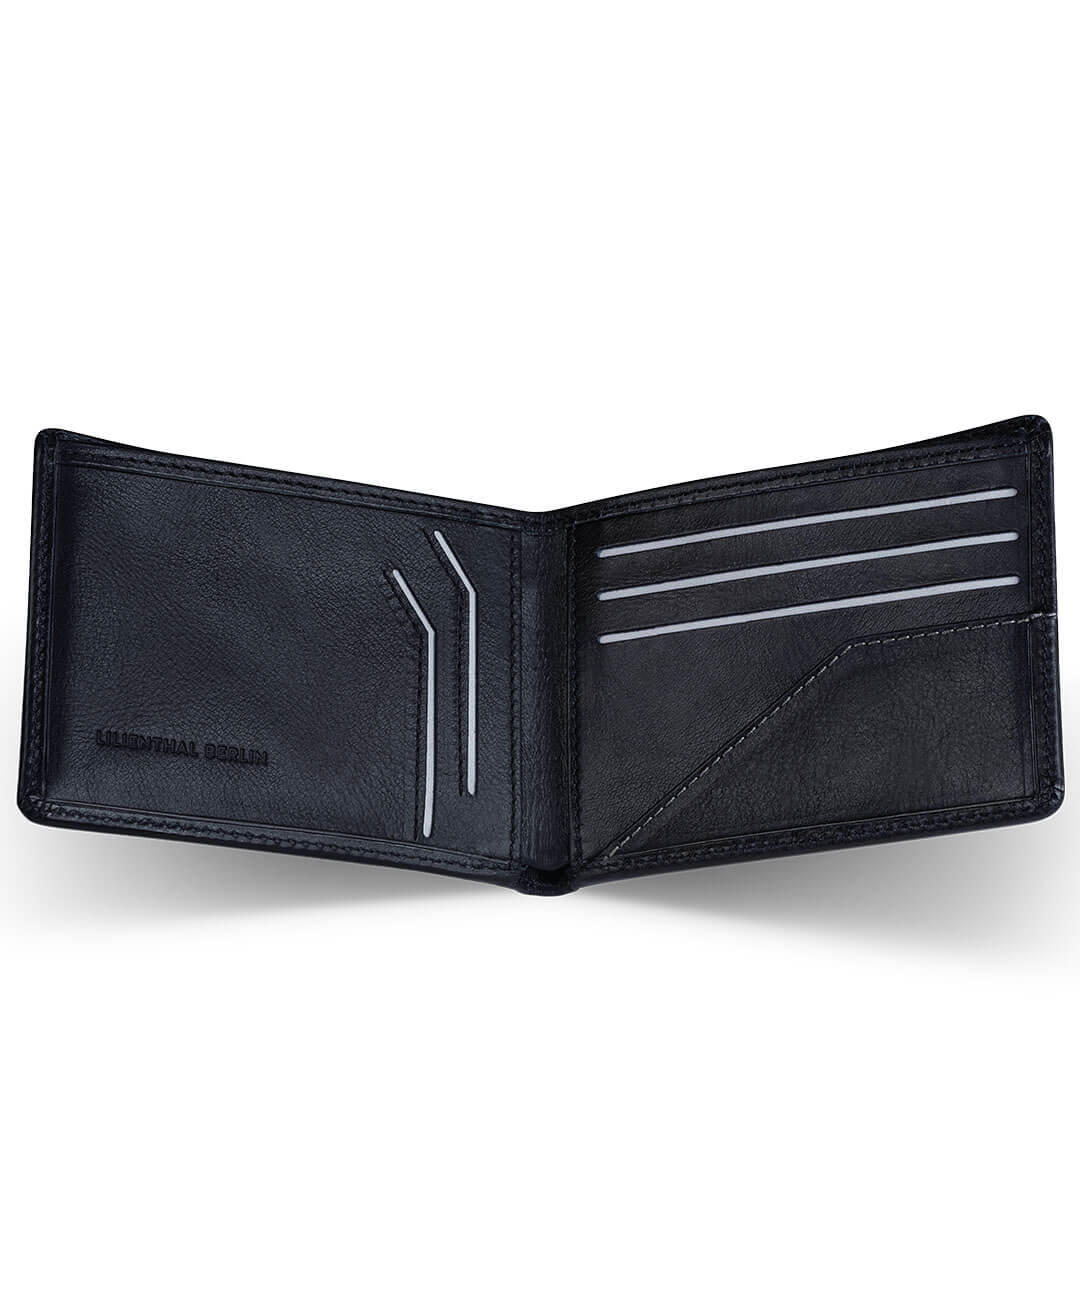 Wallet Medium - Black-Grey | All Wallets | Bags | Lilienthal Berlin -  Award-winning Designs